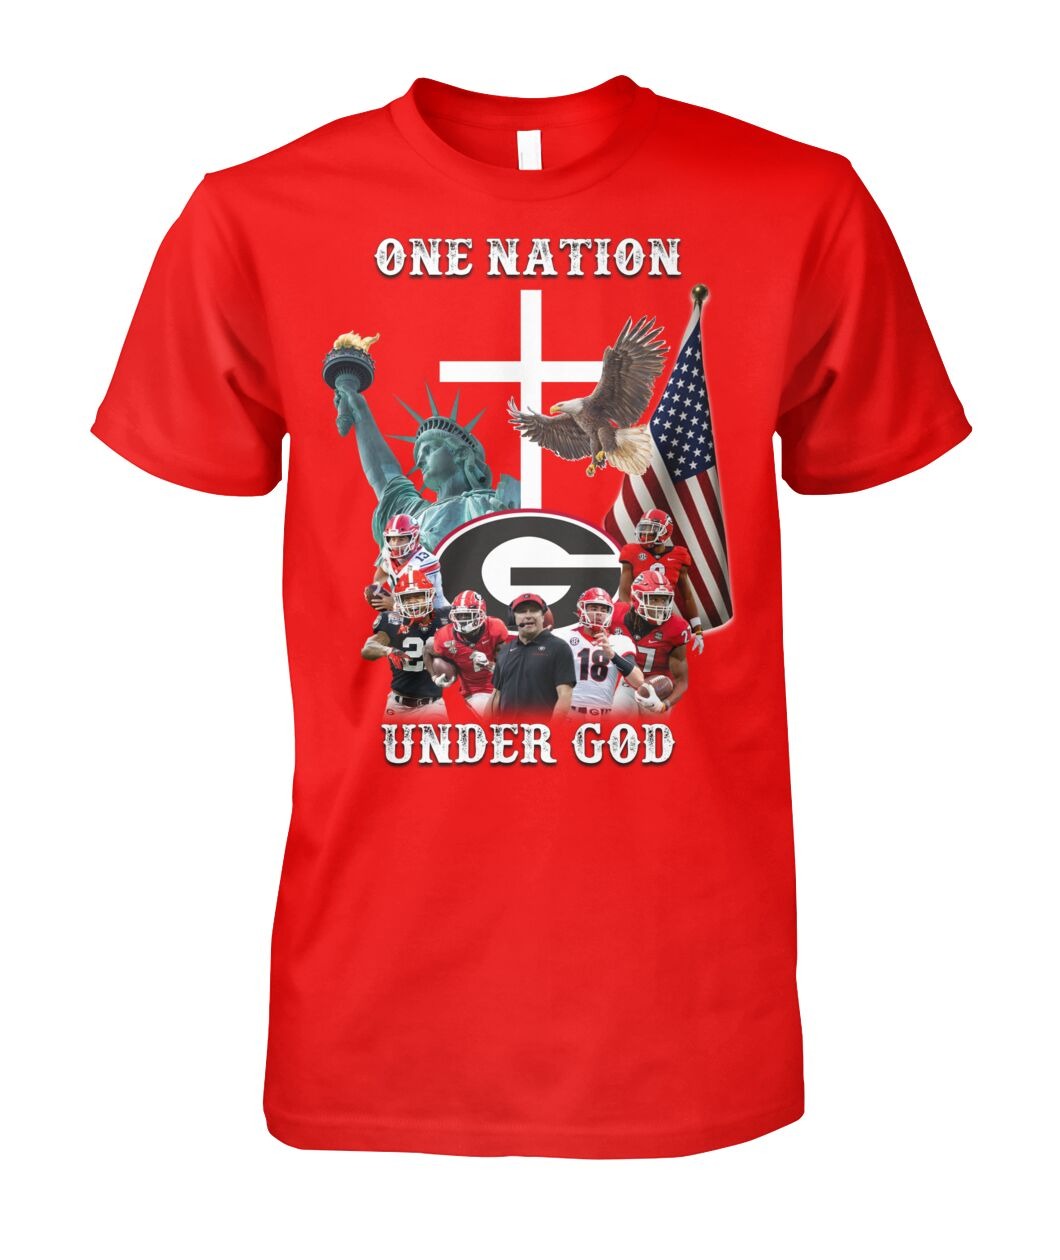 Georgia Bulldogs football One nation under god shirt as